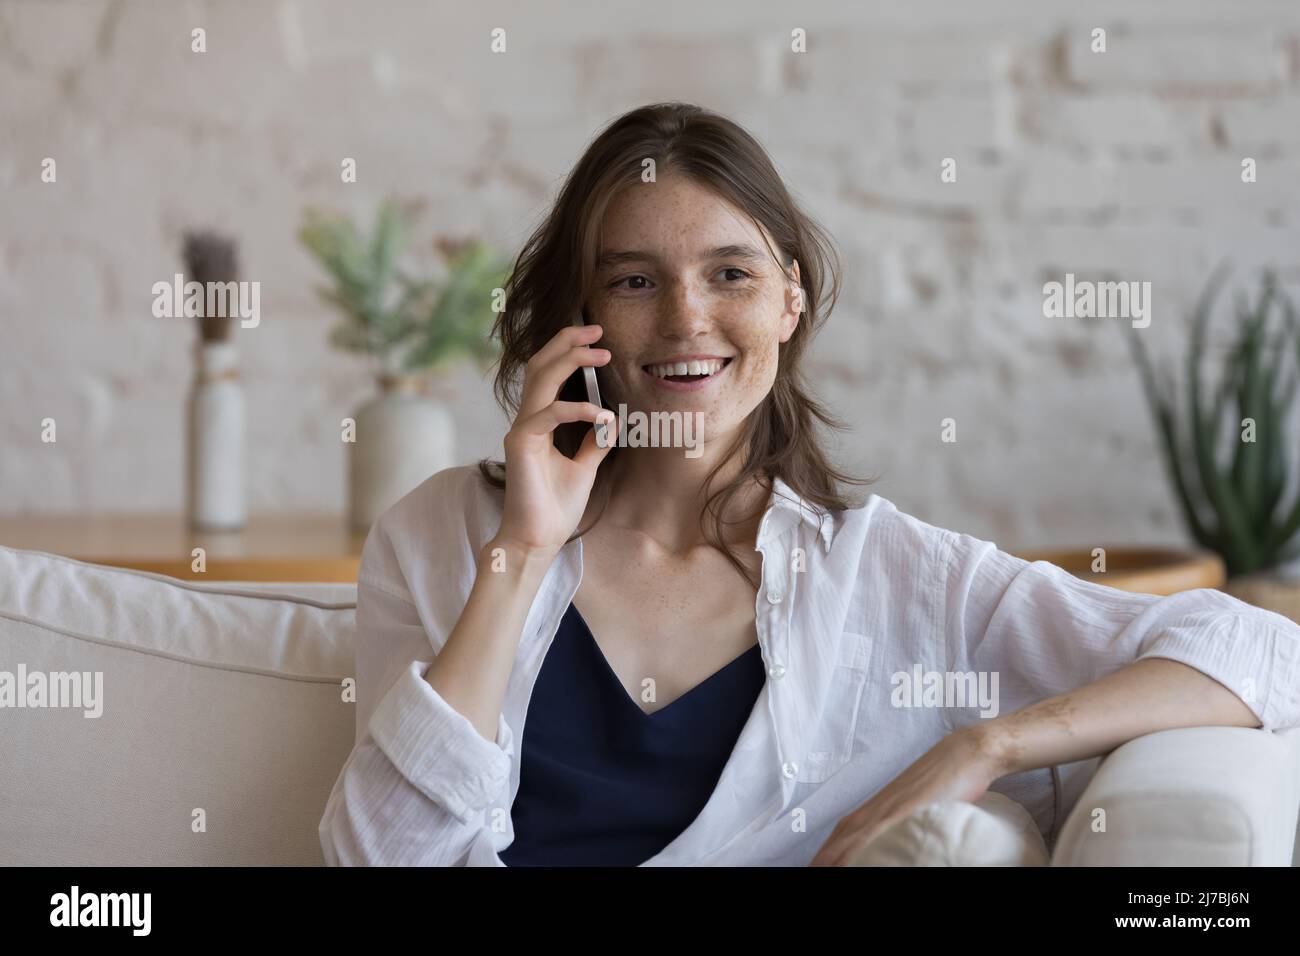 Cheerful engaged mobile phone user girl enjoying telephone talk Stock Photo